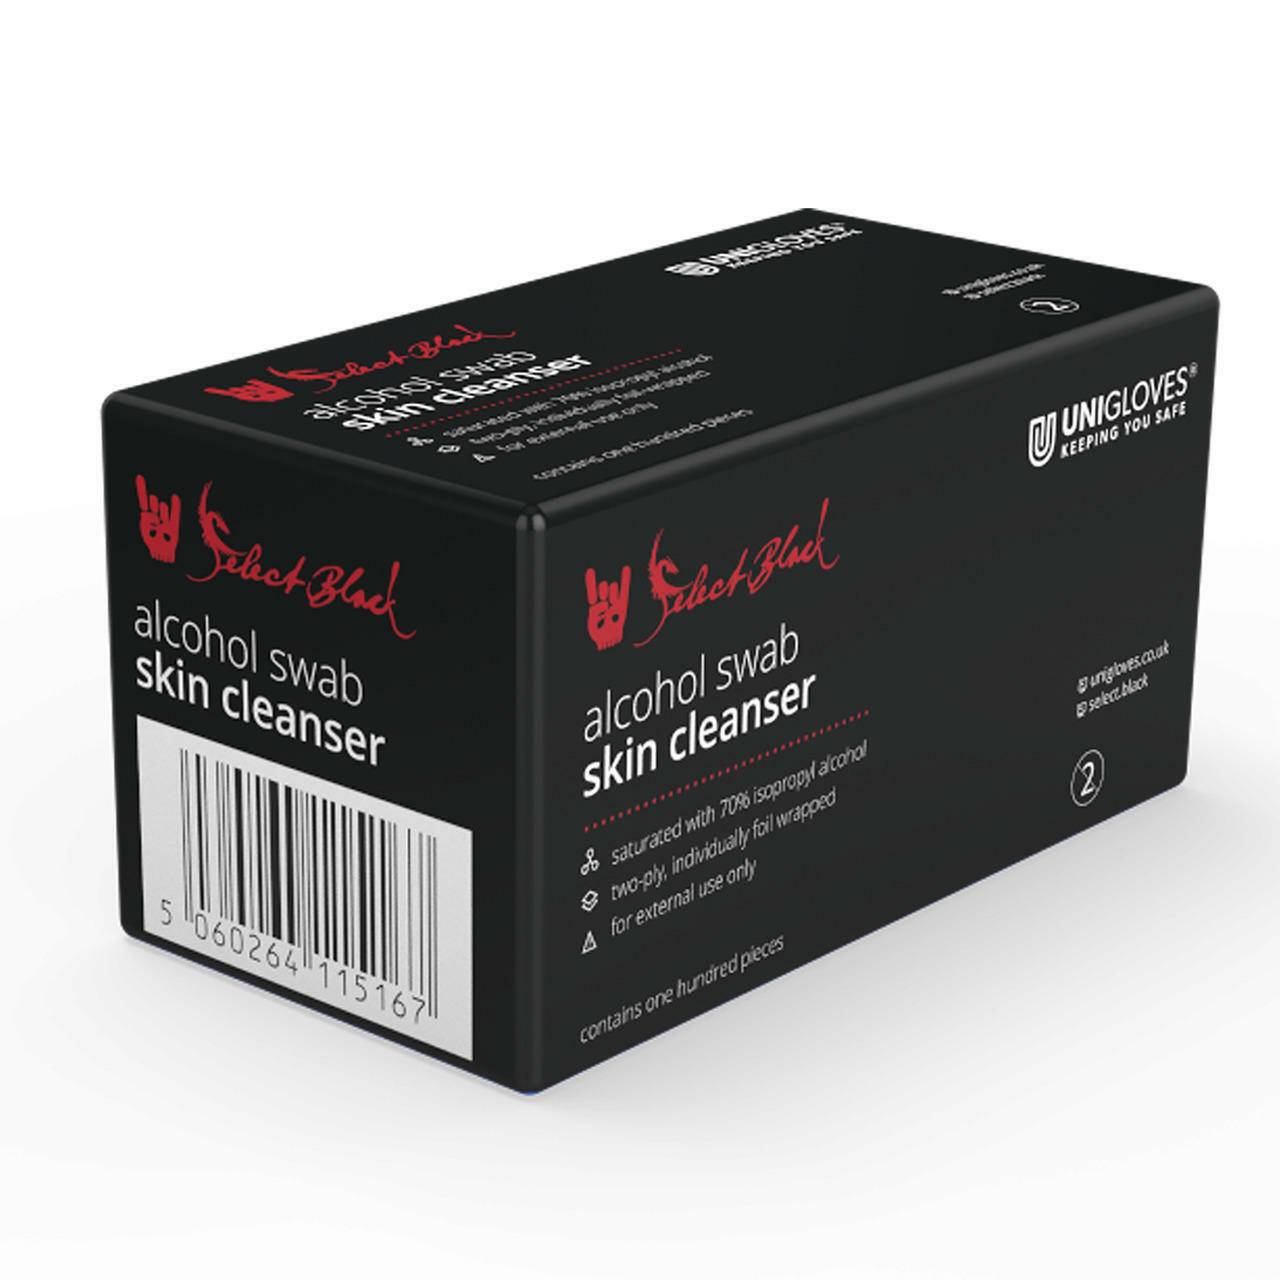 Unigloves Select Black Alcohol Swab Skin Cleanser - UKMEDI